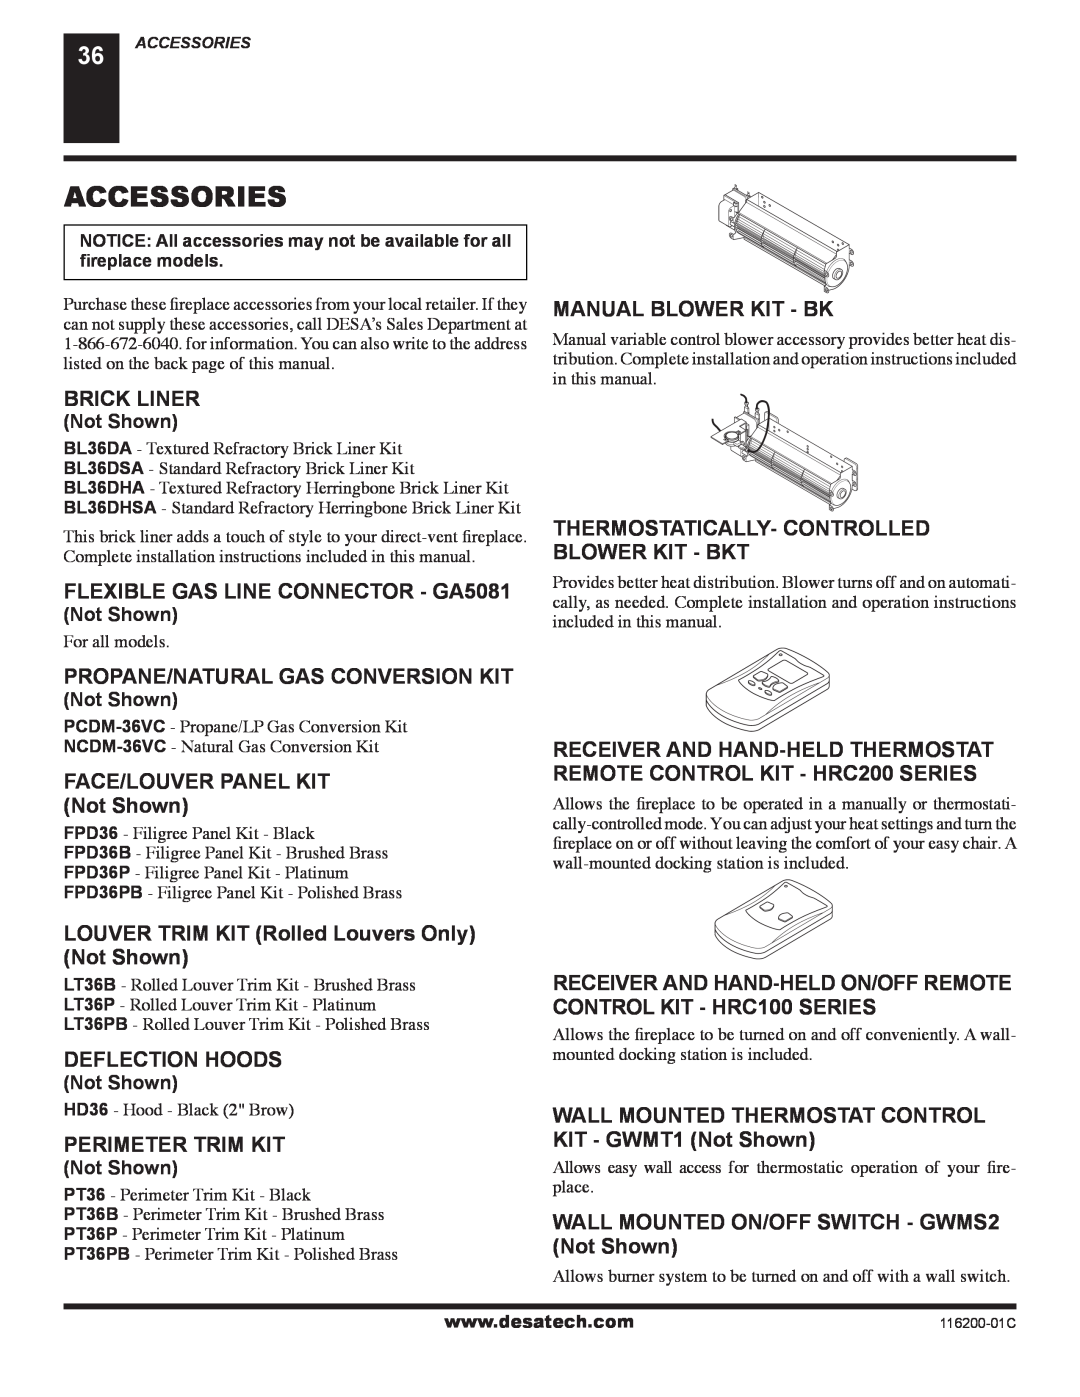 Desa CGCDV36NR Accessories, Brick Liner, FLEXIBLE GAS LINE CONNECTOR - GA5081, Manual Blower Kit - Bk, Deflection Hoods 